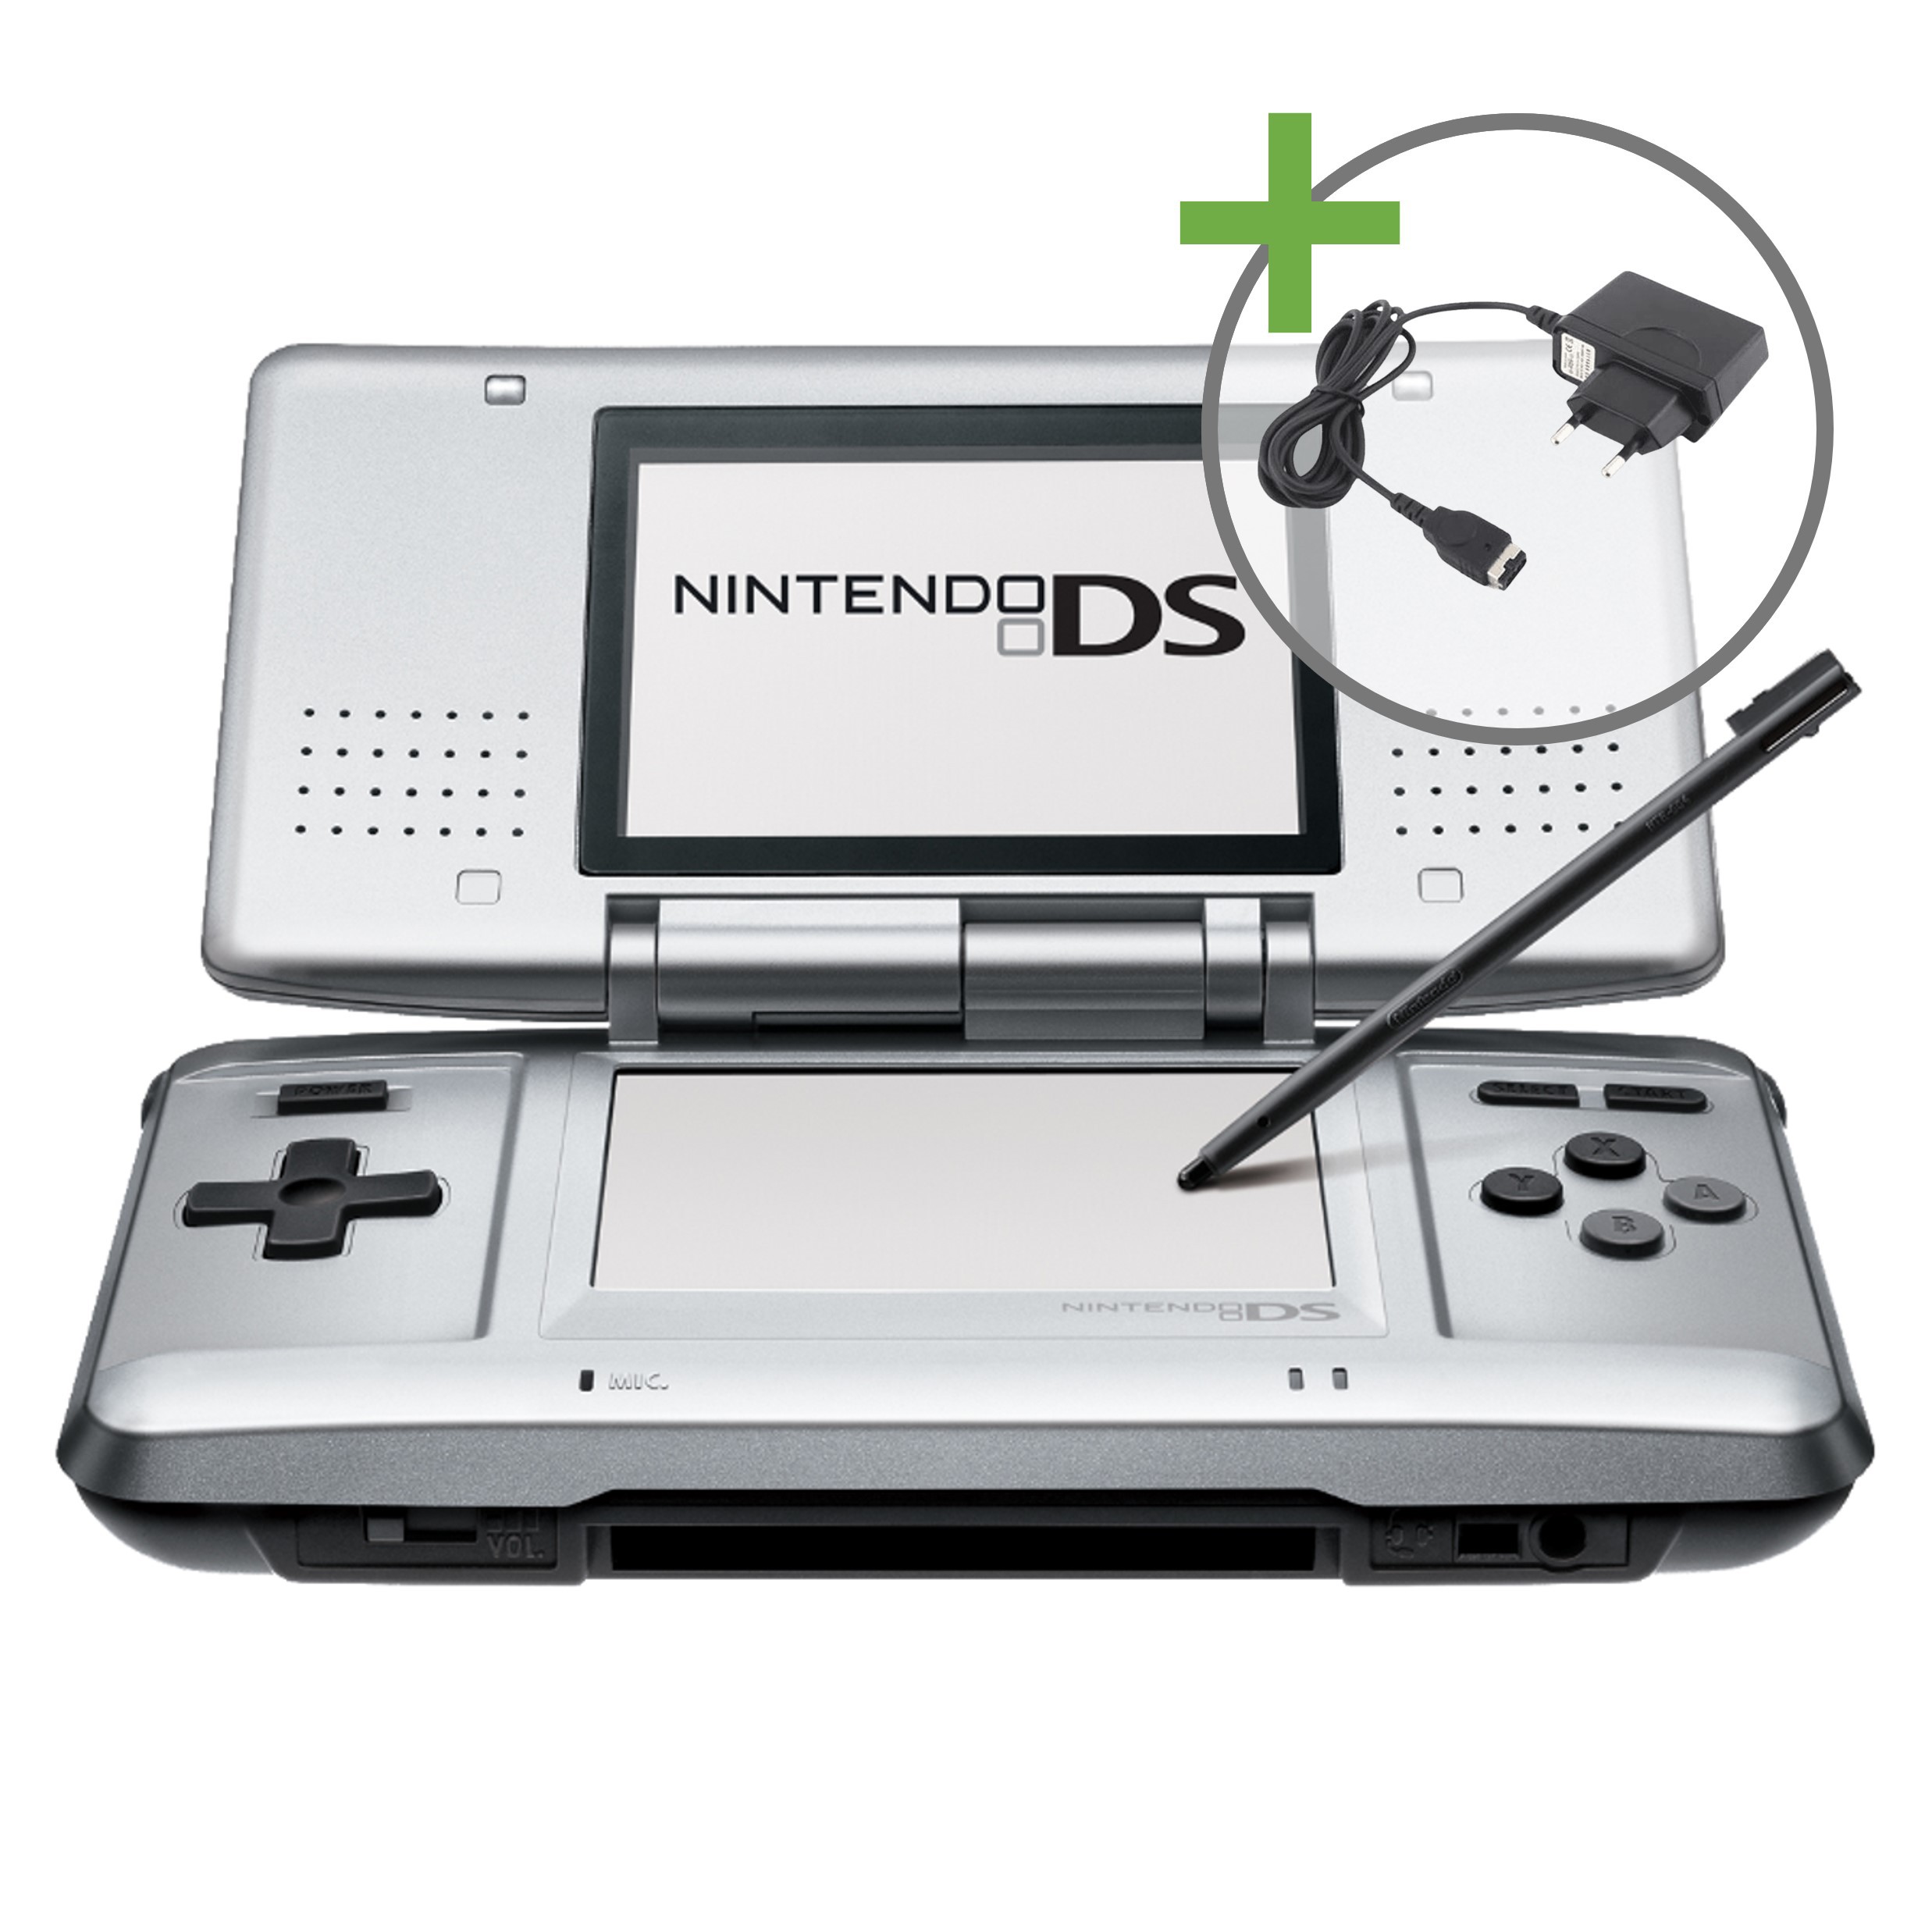 Nintendo DS Original - Silver - Nintendo DS Hardware